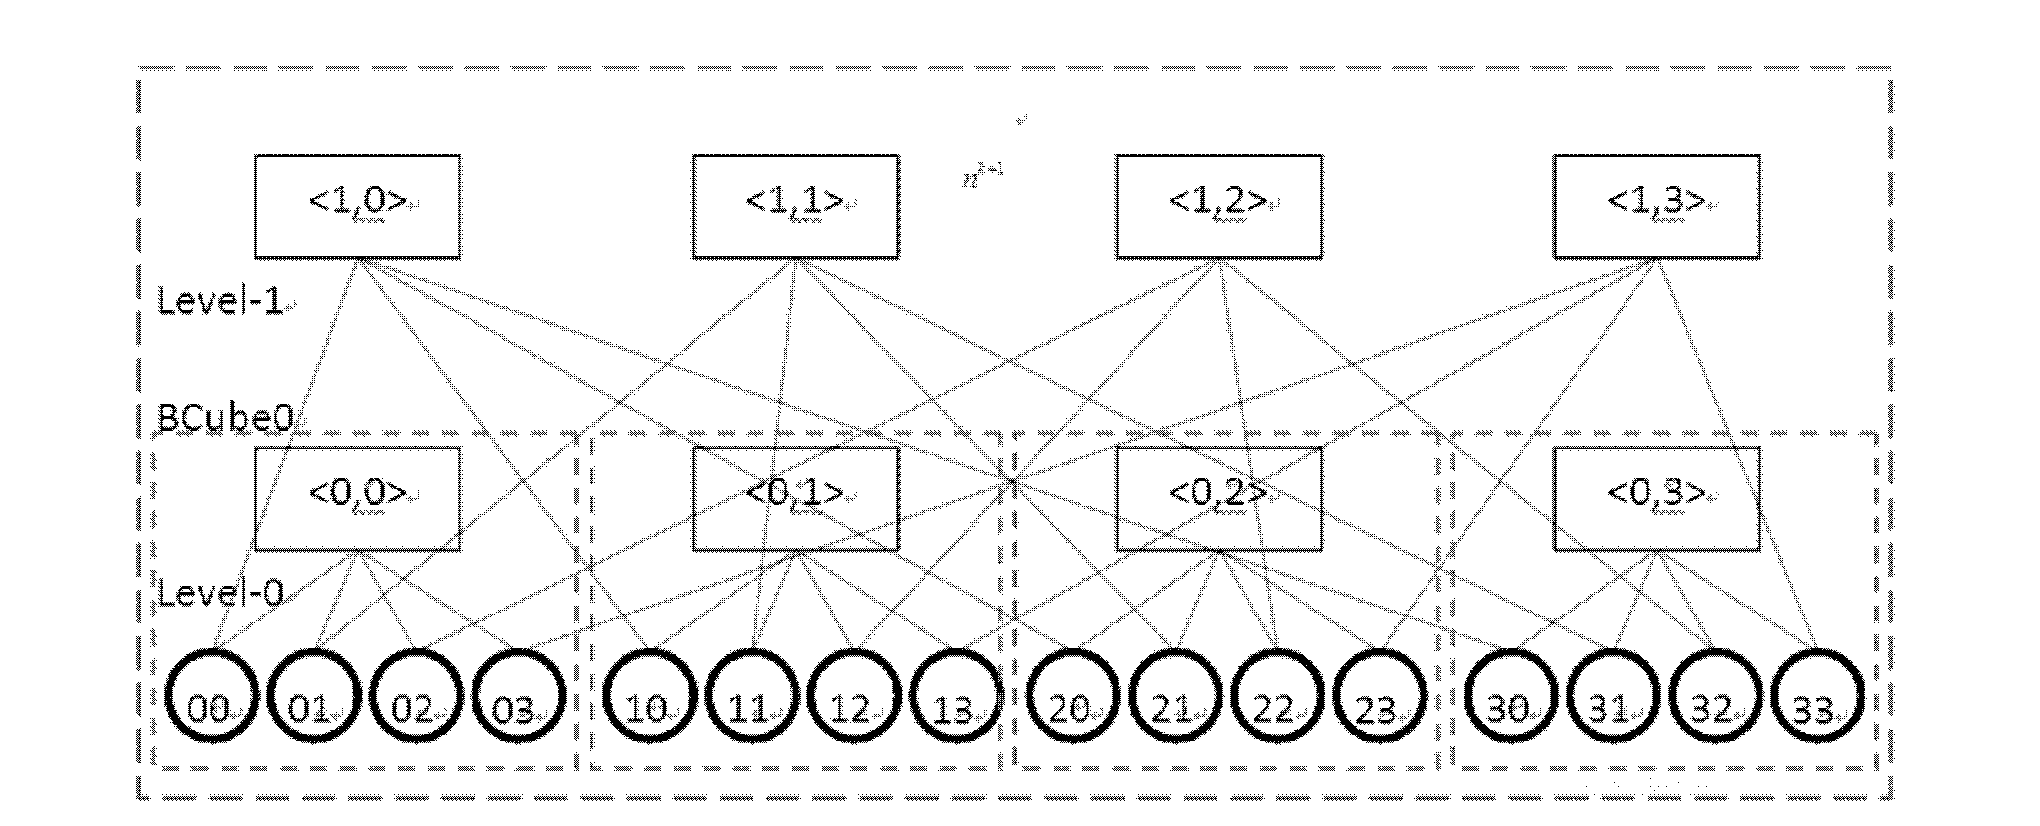 Nondestructive continuous extensible interconnection structure for data center